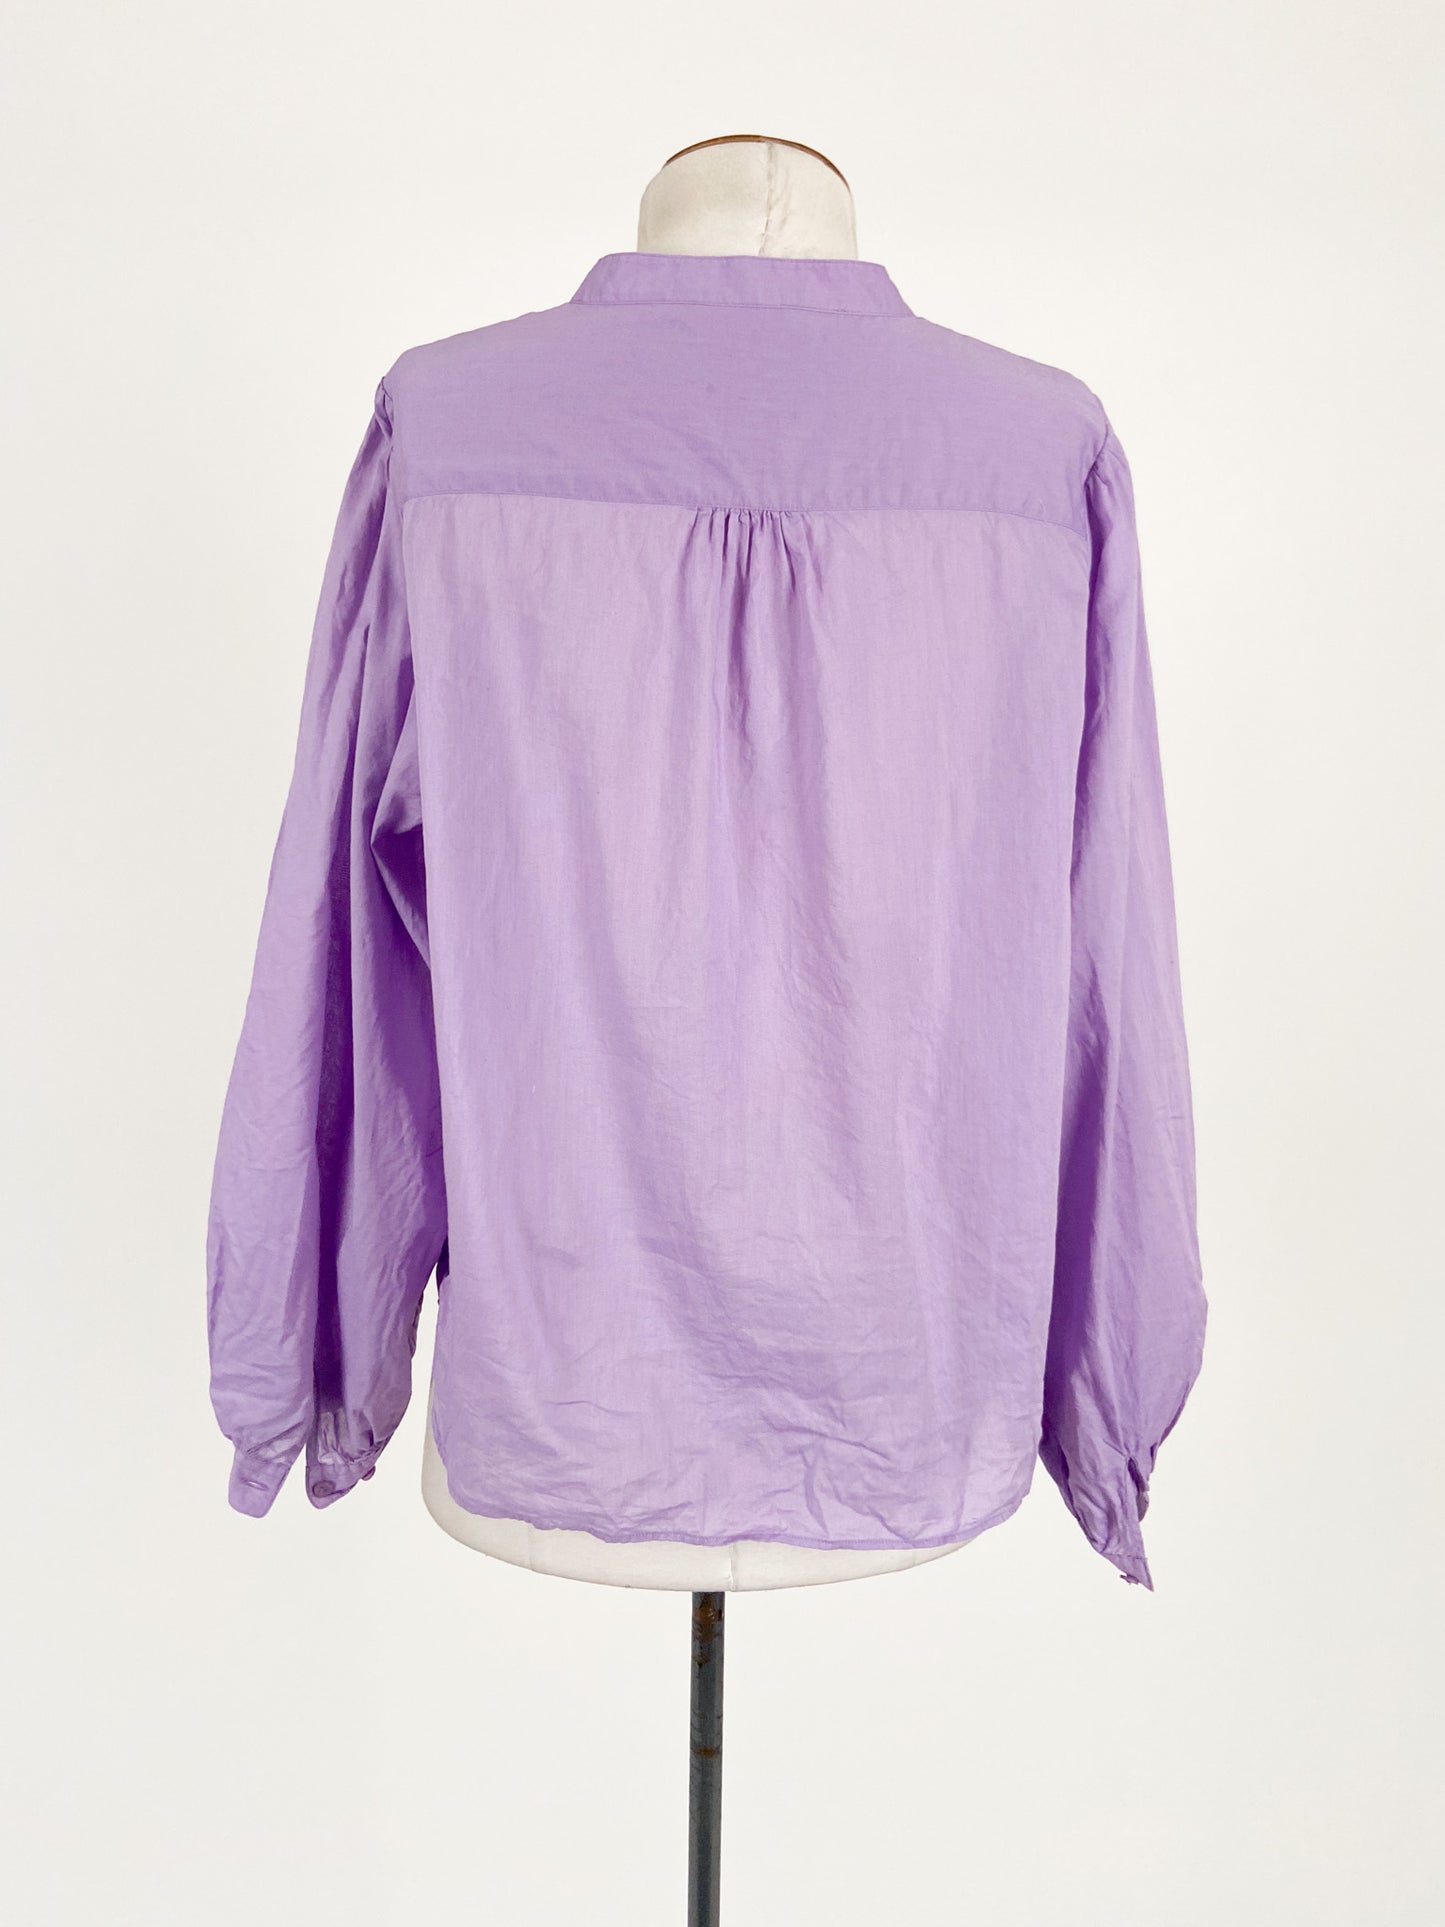 Uniqlo | Purple Workwear Top | Size M